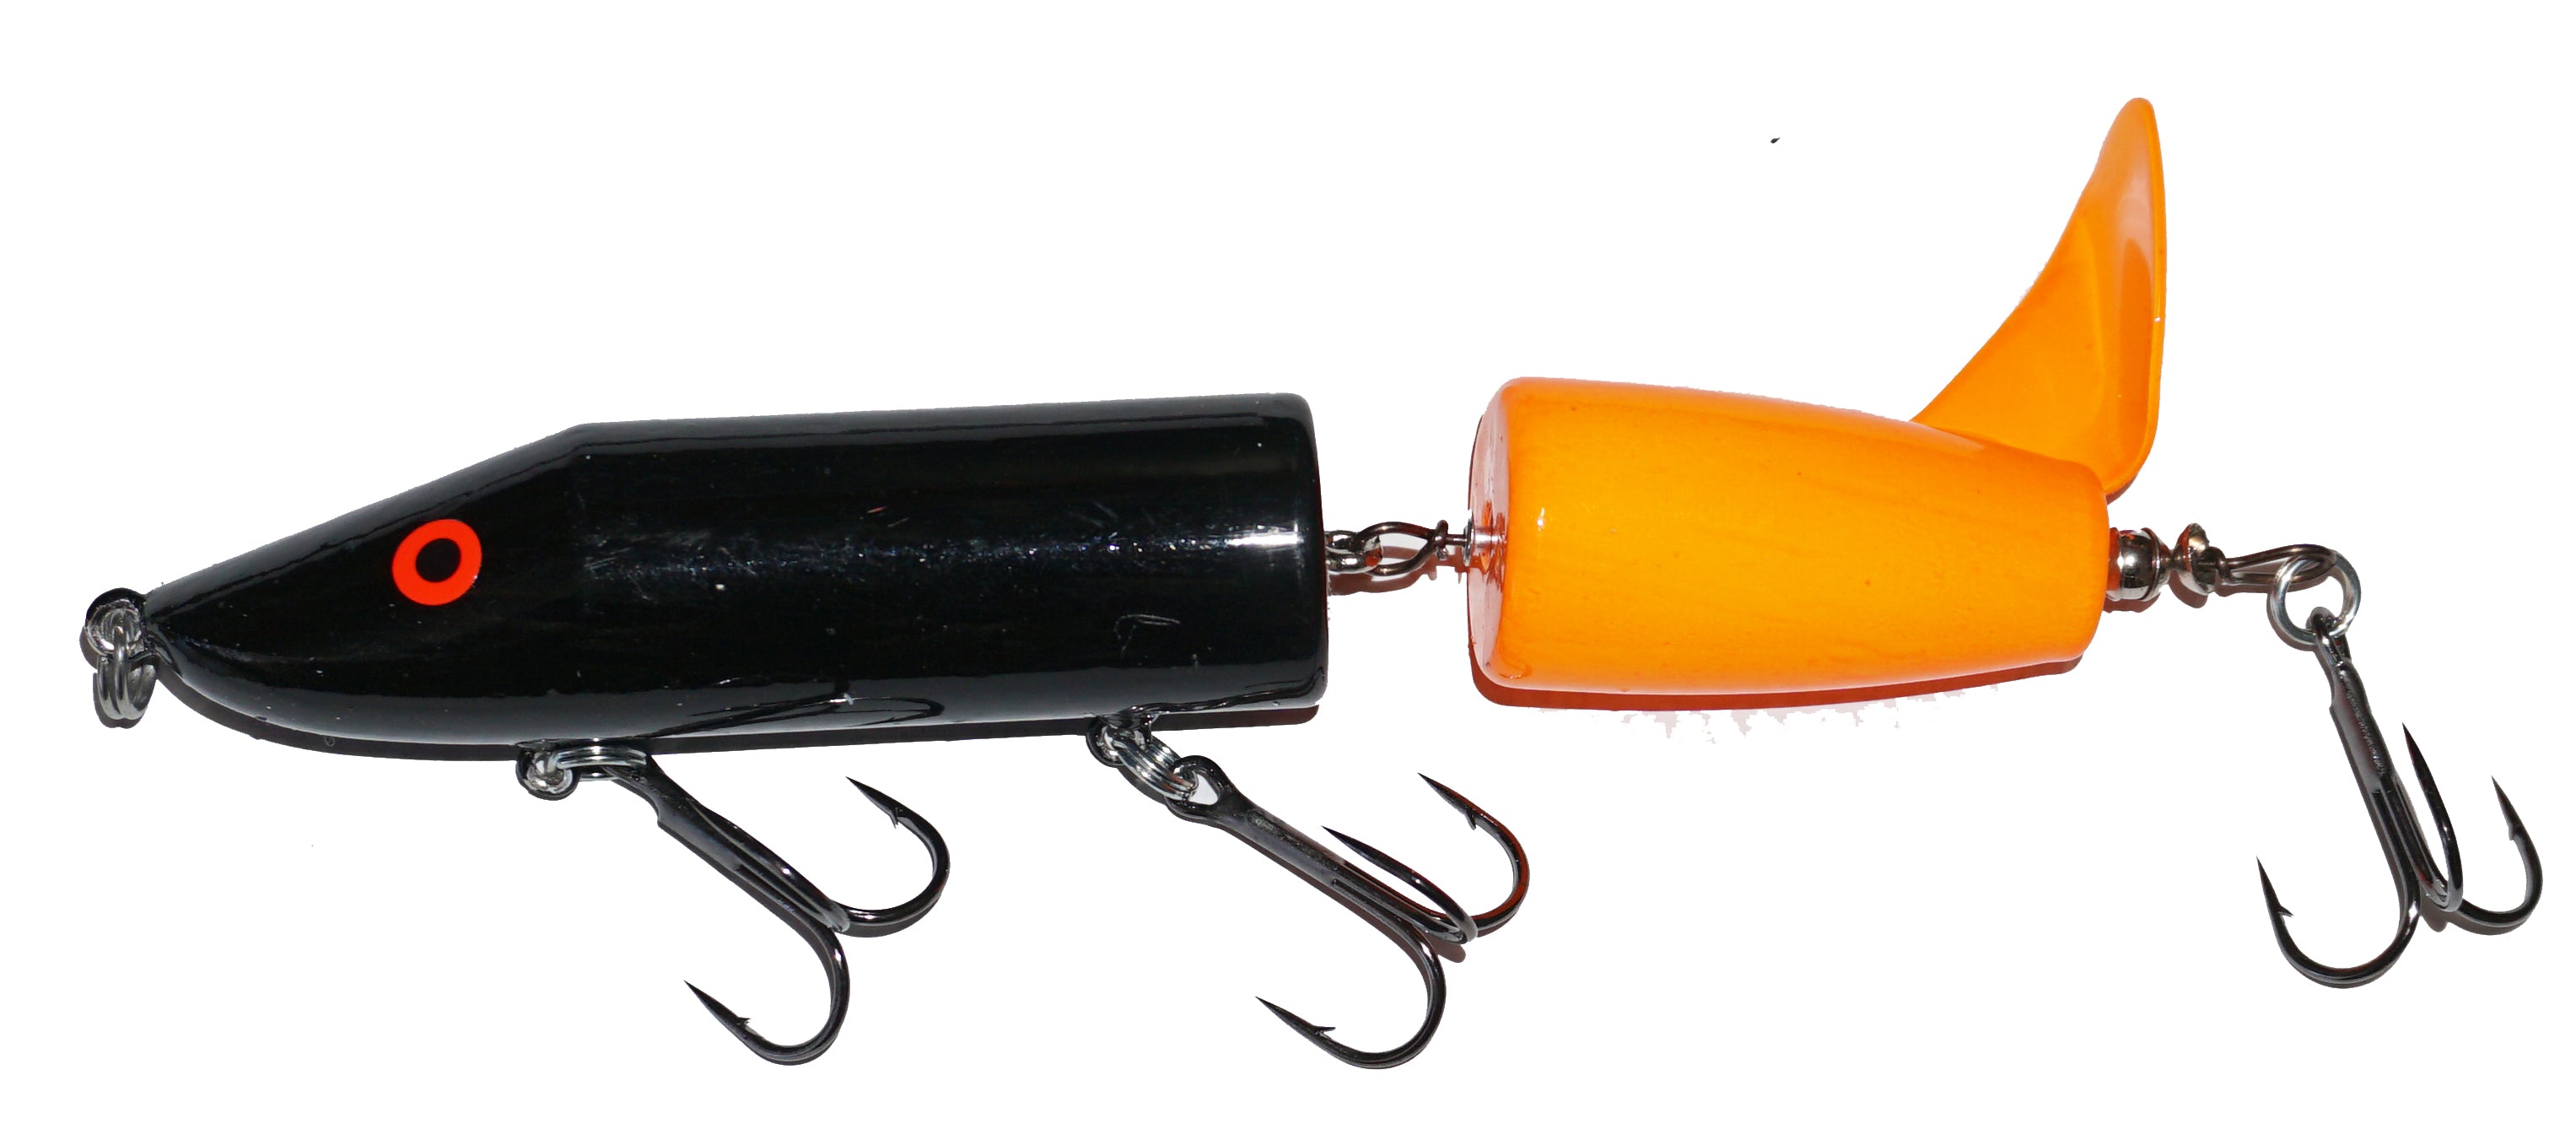 Smity/Dick Gries Lures Original Top Kick Surface Bait Black Orange